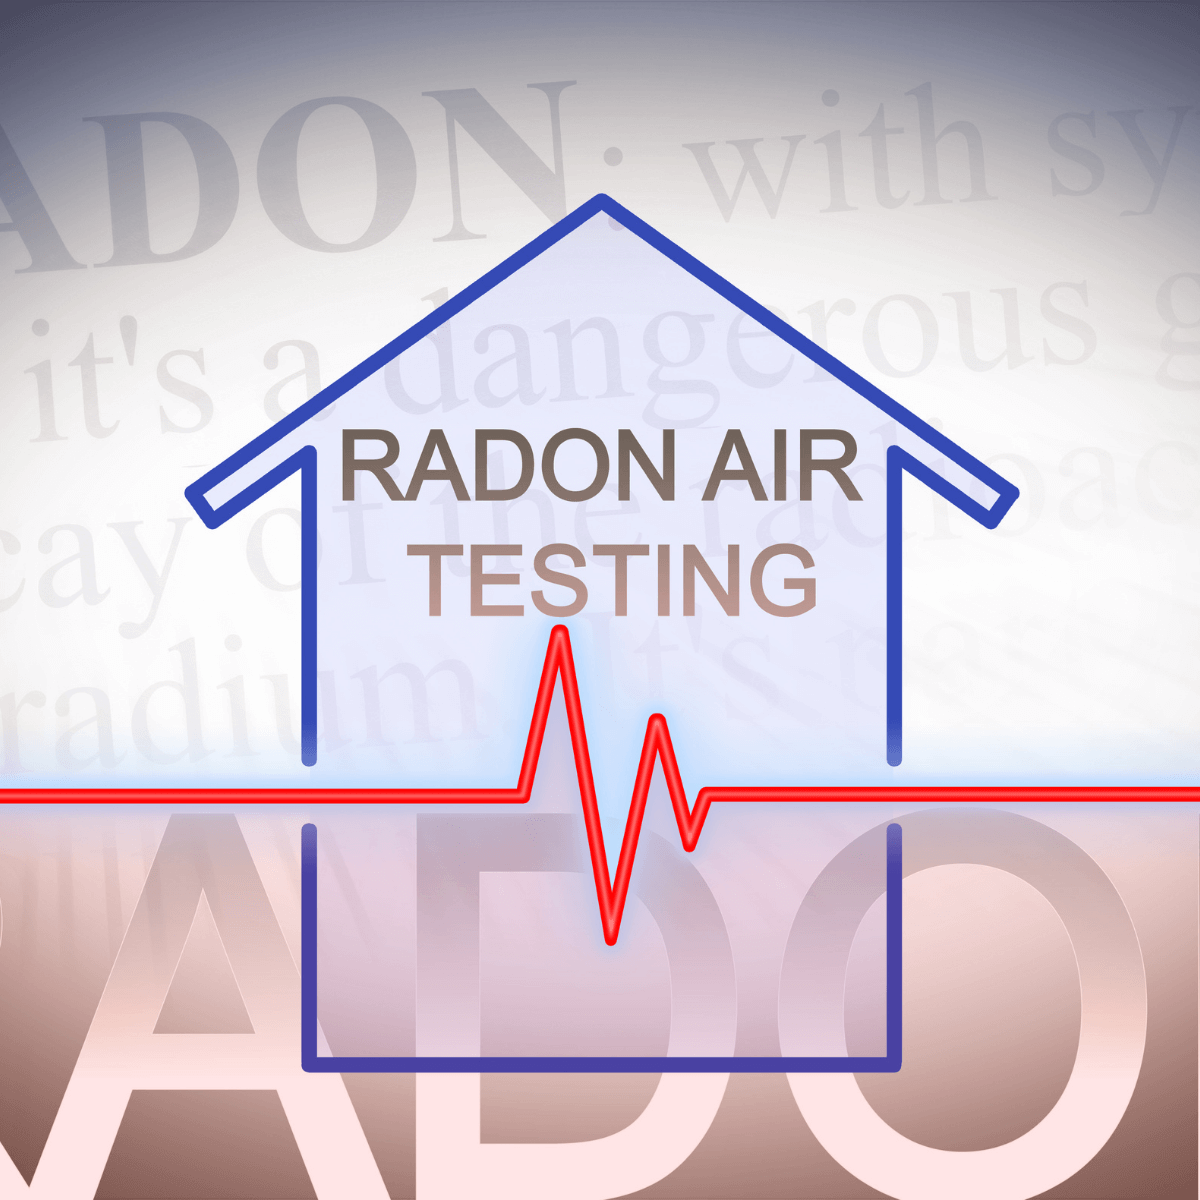 What is radon?